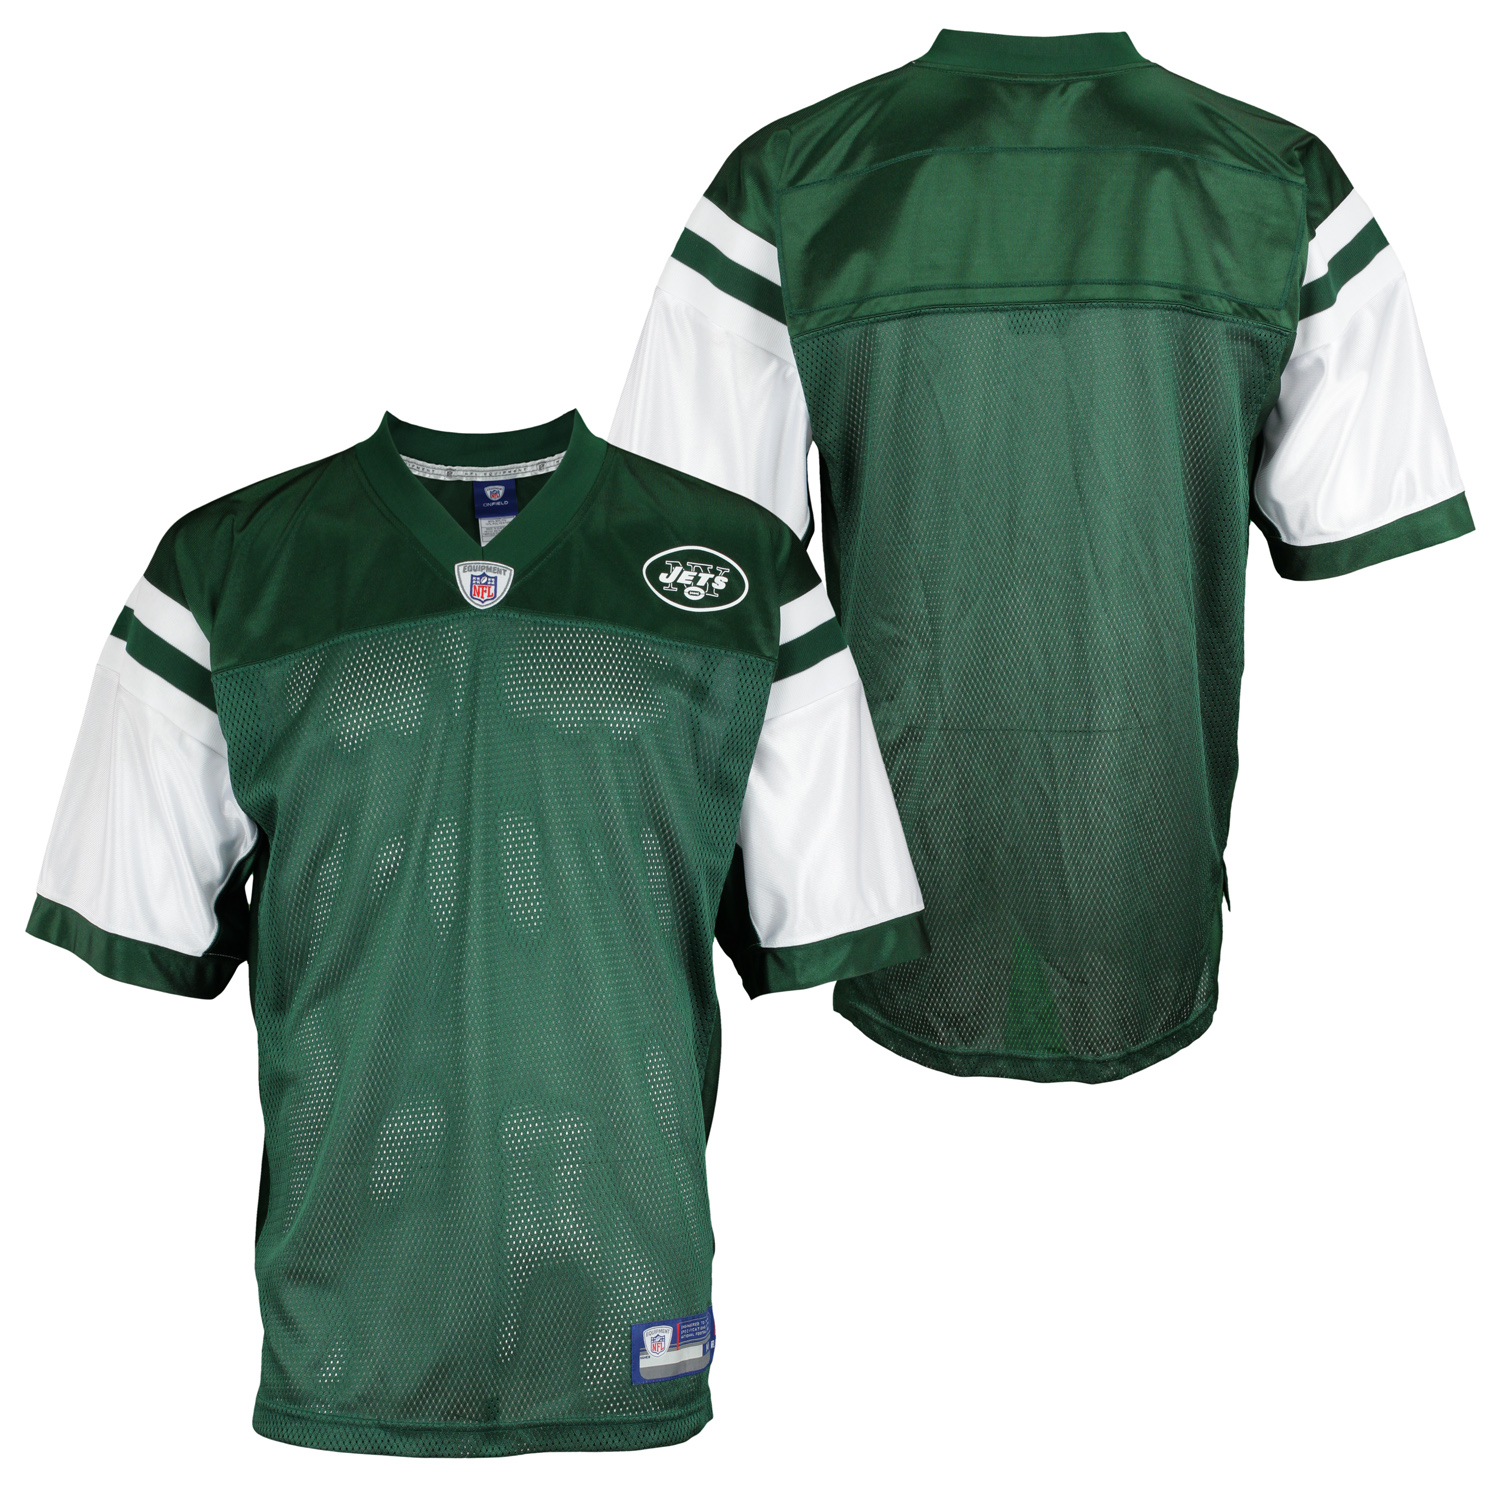 Reebok NFL New York Jets Men\'s Blank Replica Football Jersey, Green eBay